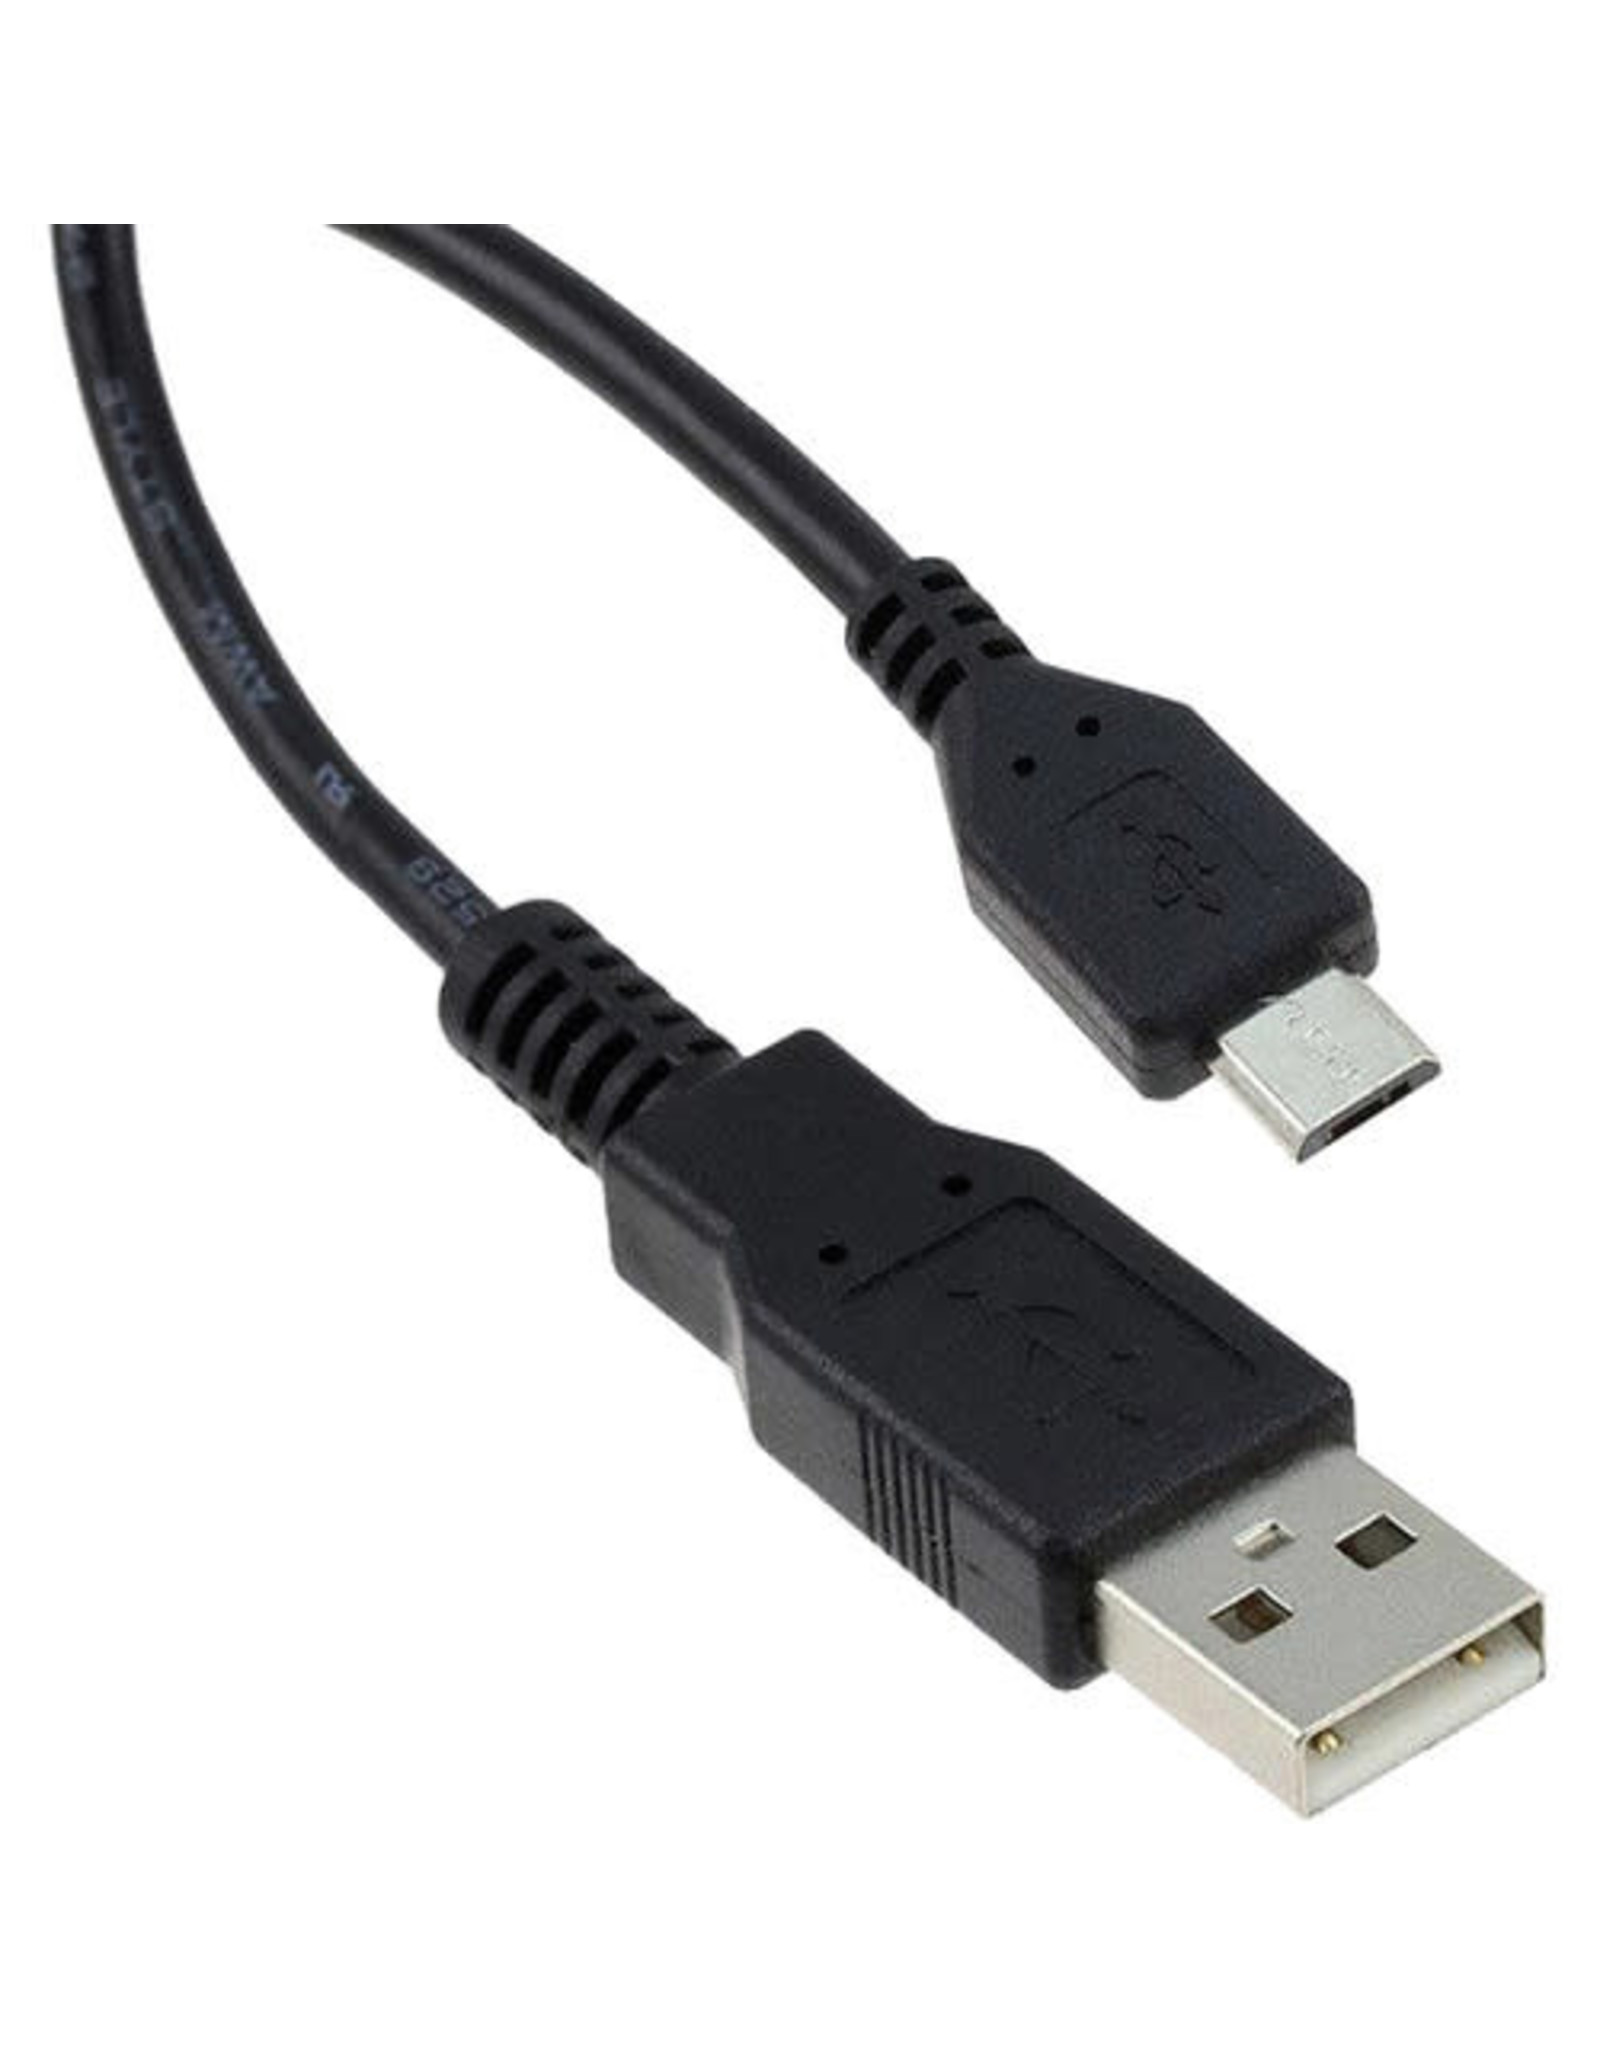 DayStar DayStar Filters Quark USB Power Cable (6')